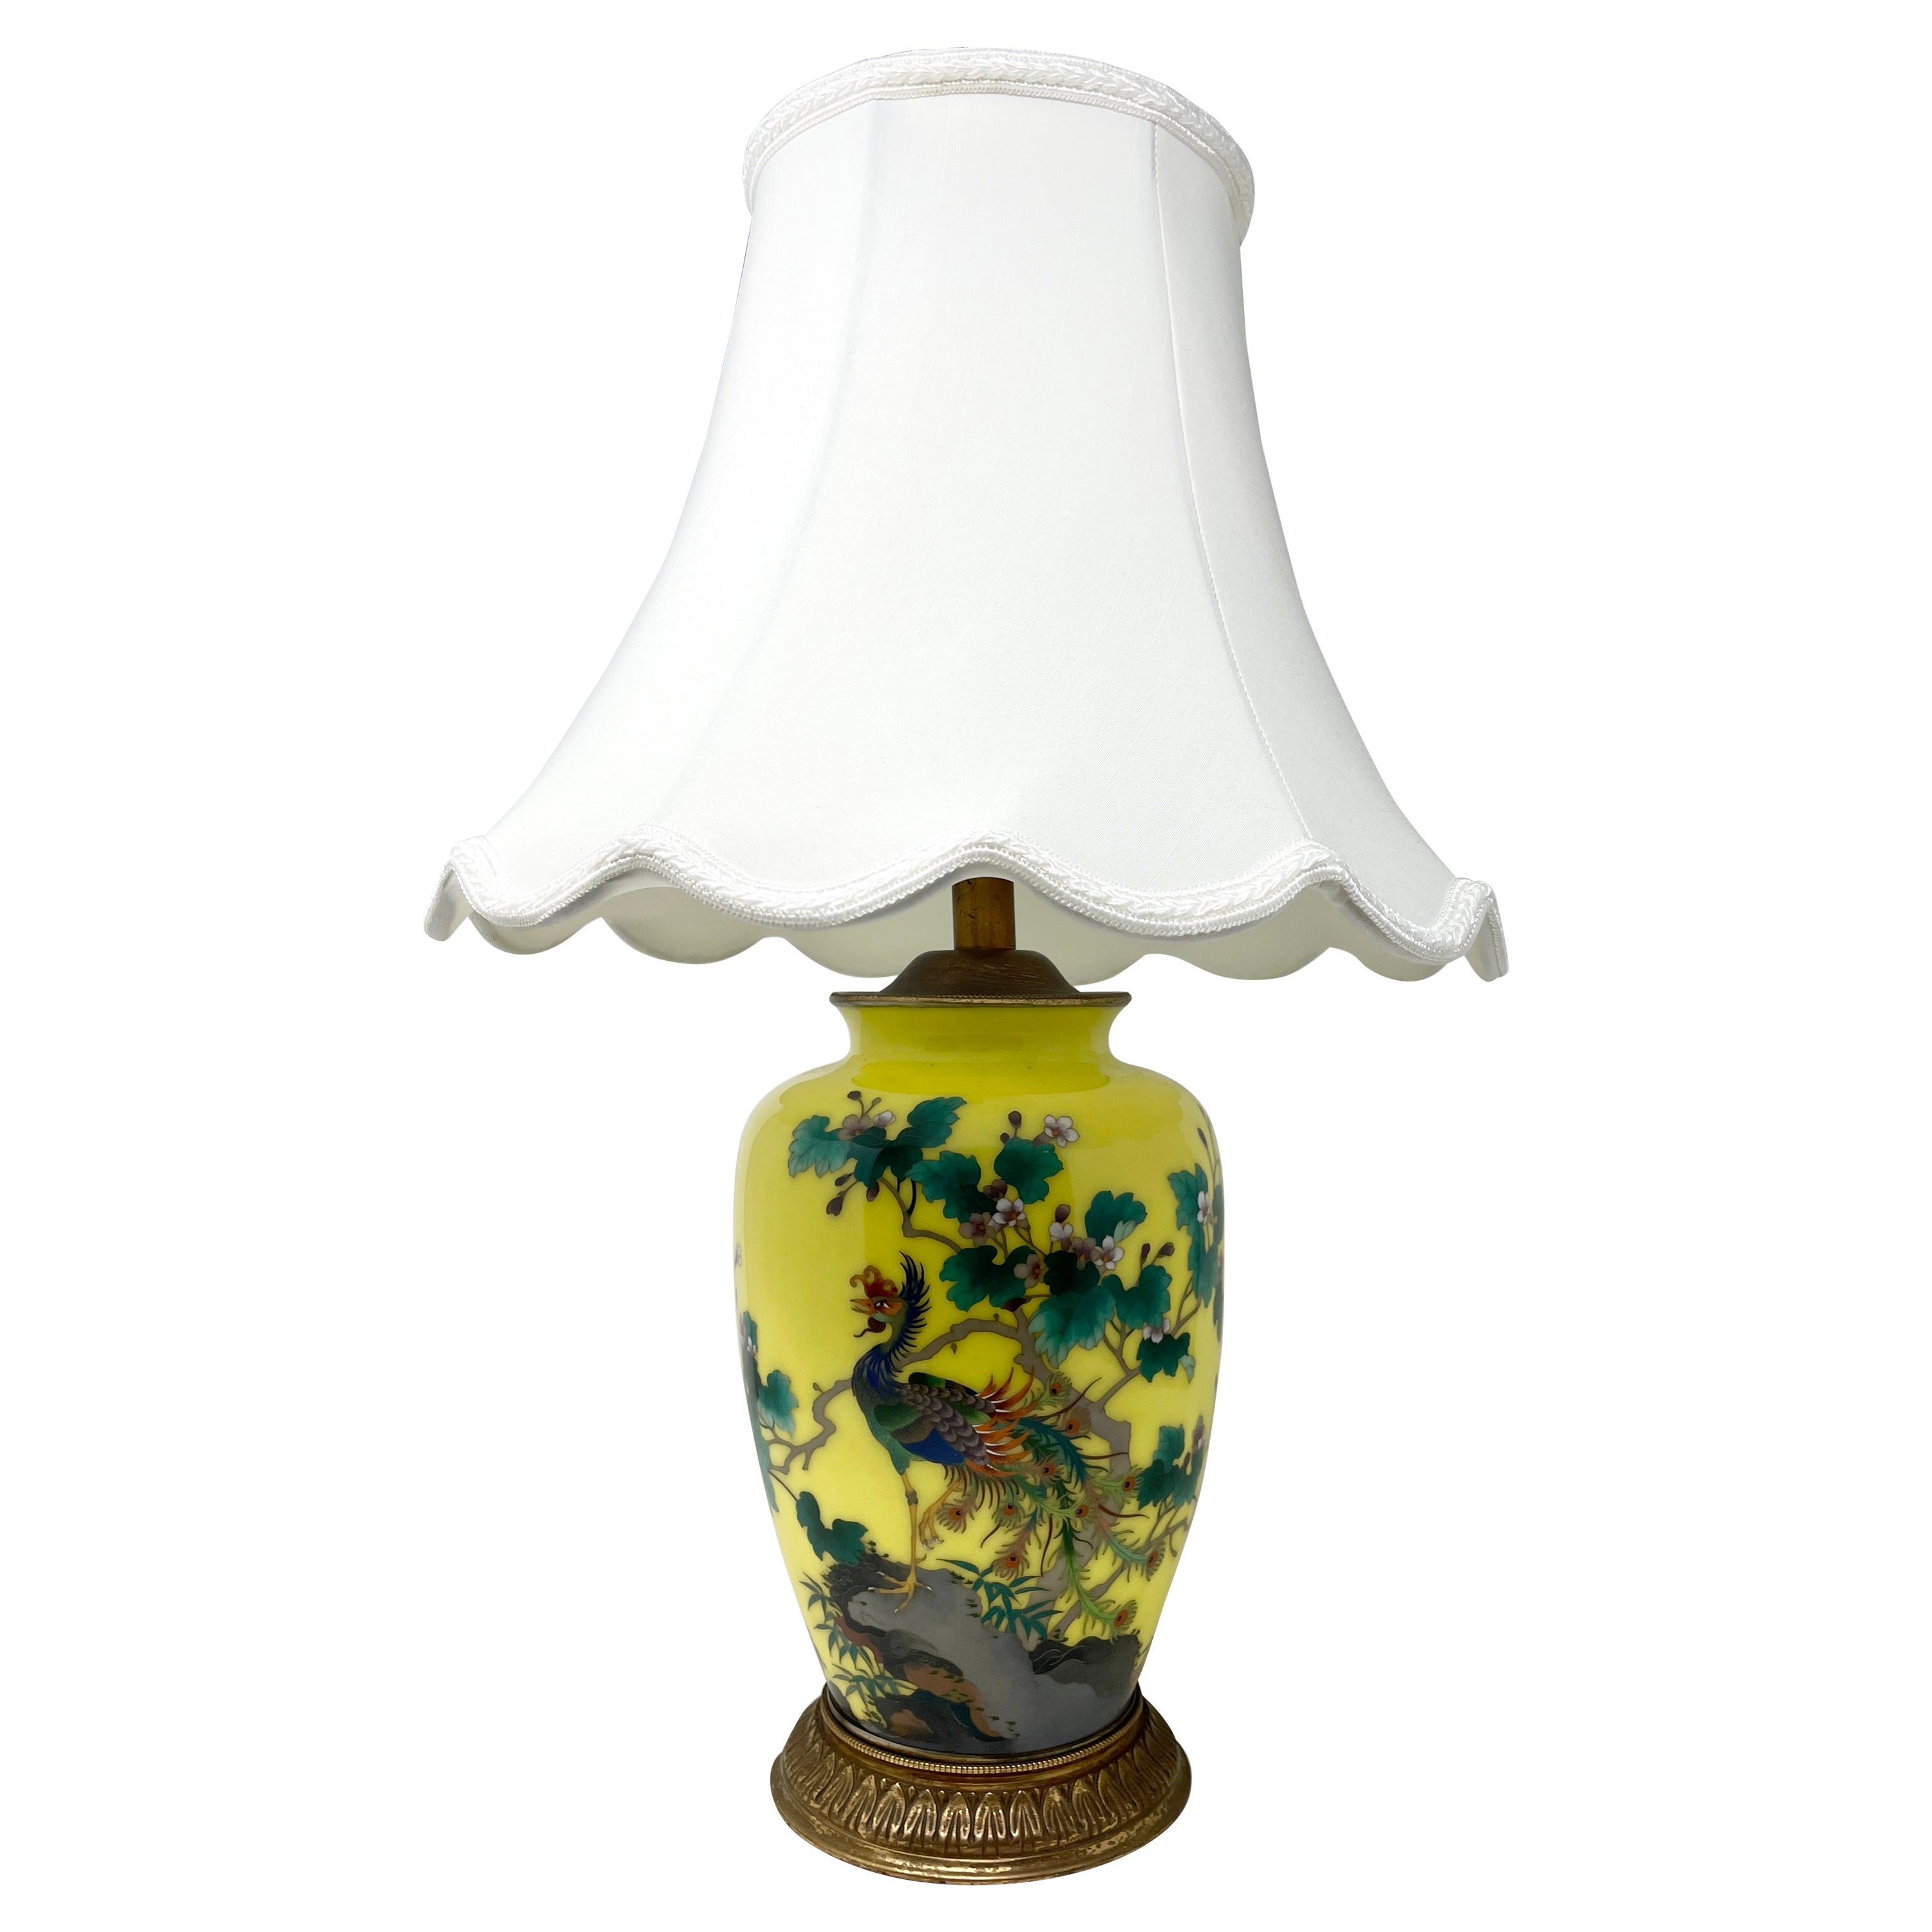 Antique English Yellow Enamel Porcelain & Gold Bronze Lamp, Circa 1900's-1910's. For Sale